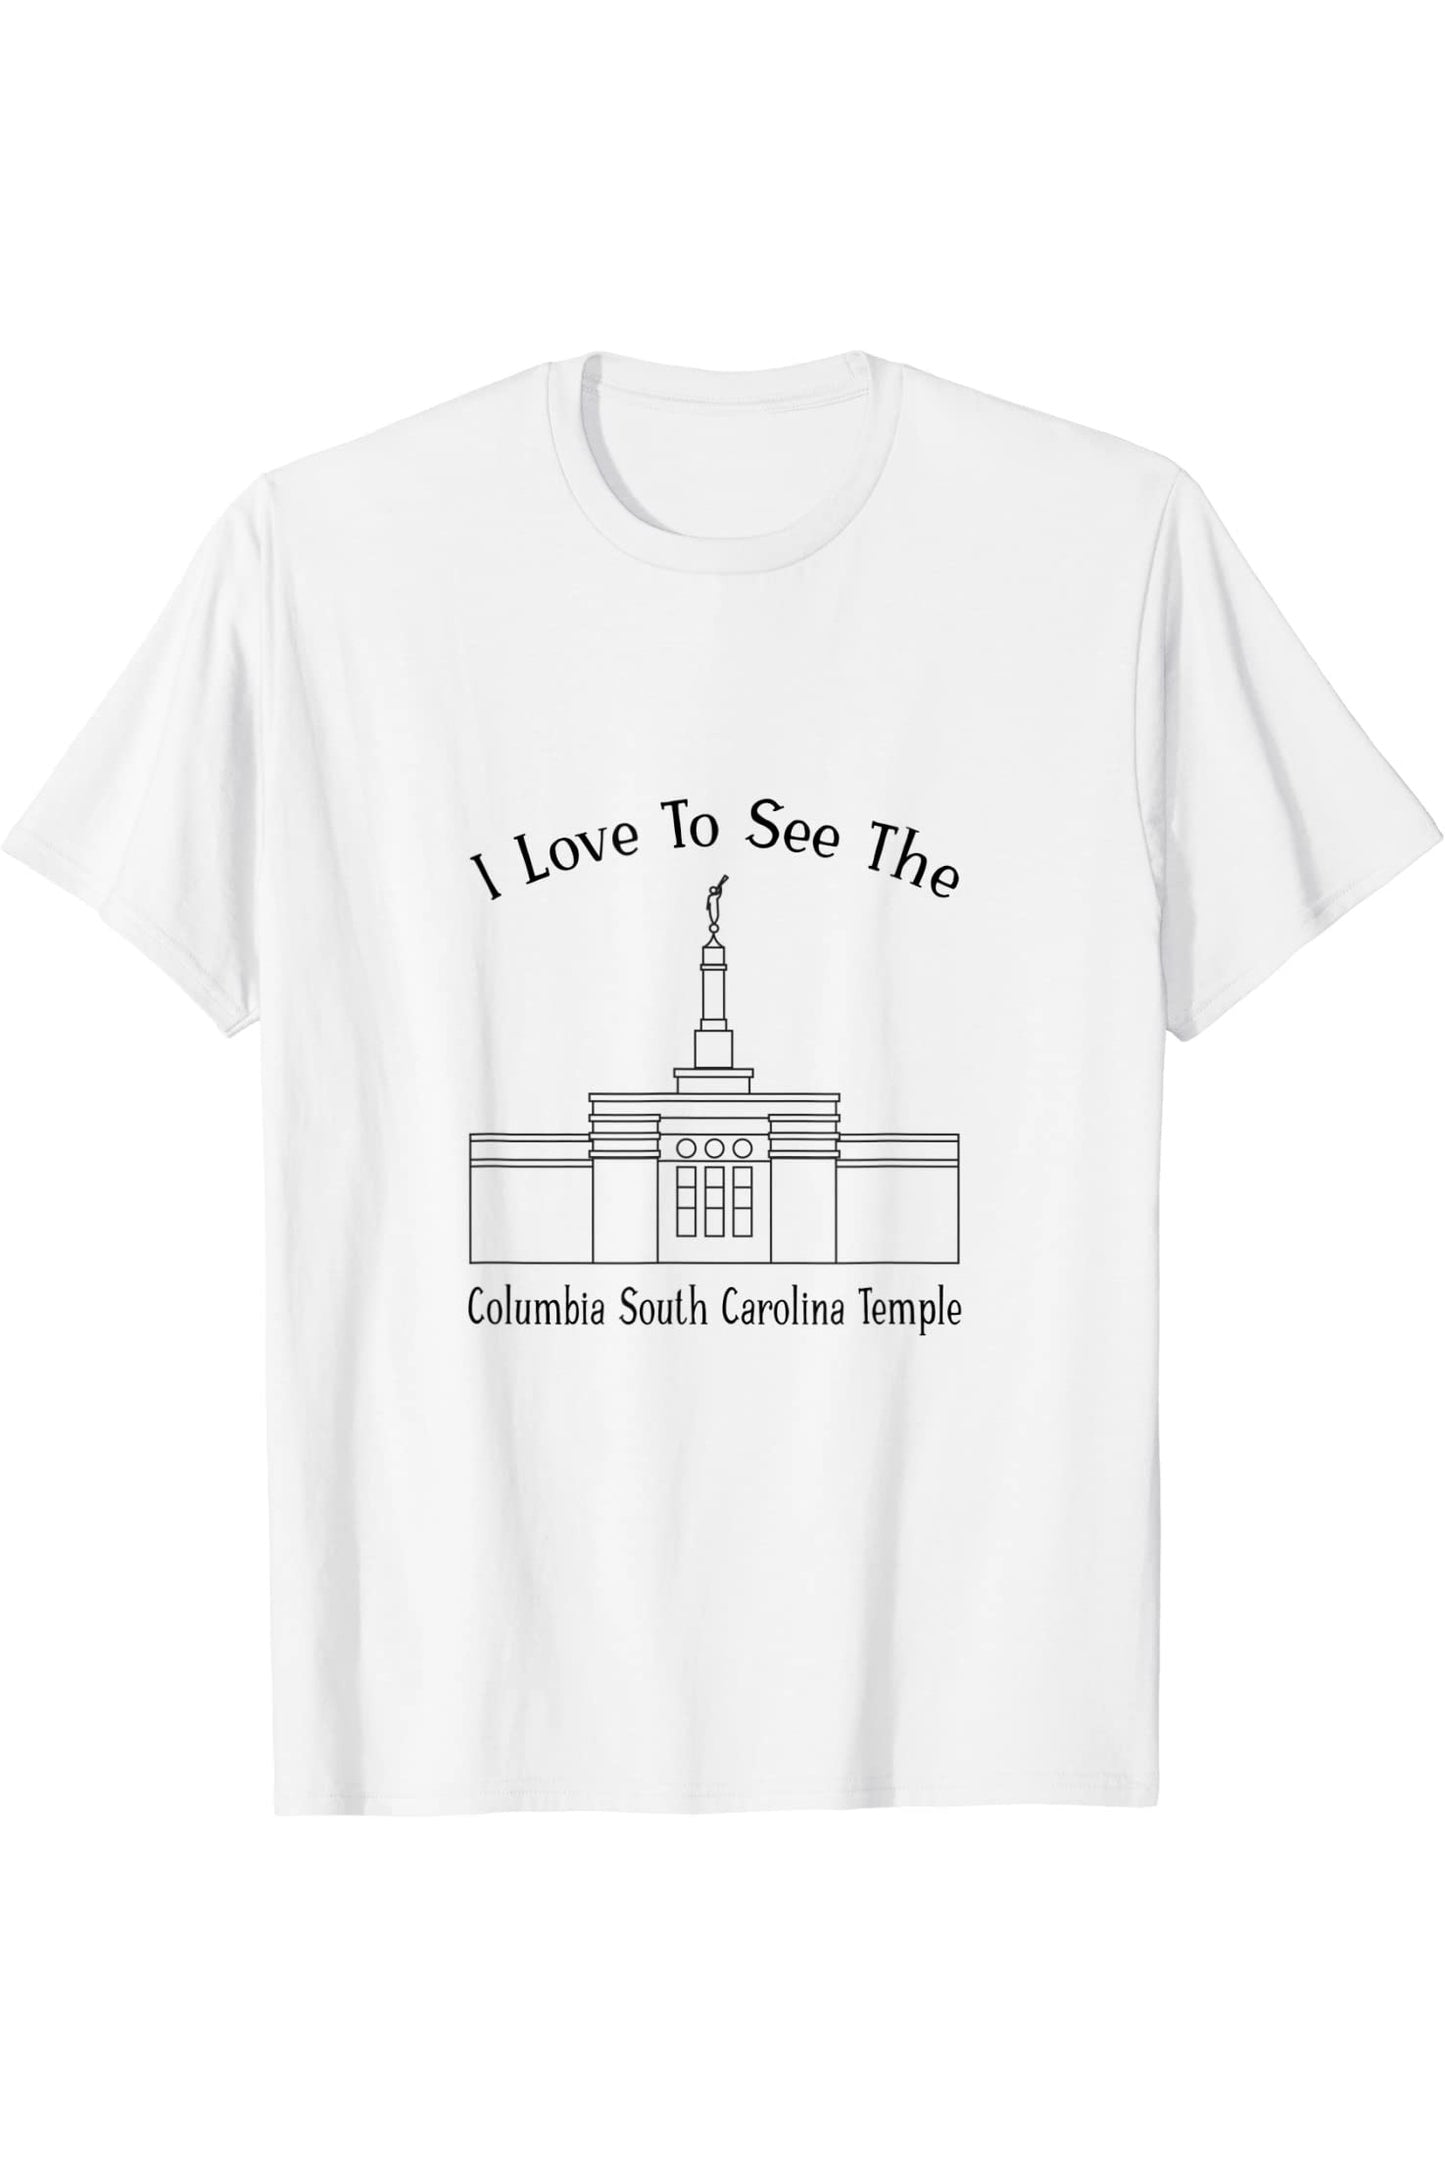 Columbia South Carolina Temple T-Shirt - Happy Style (English) US